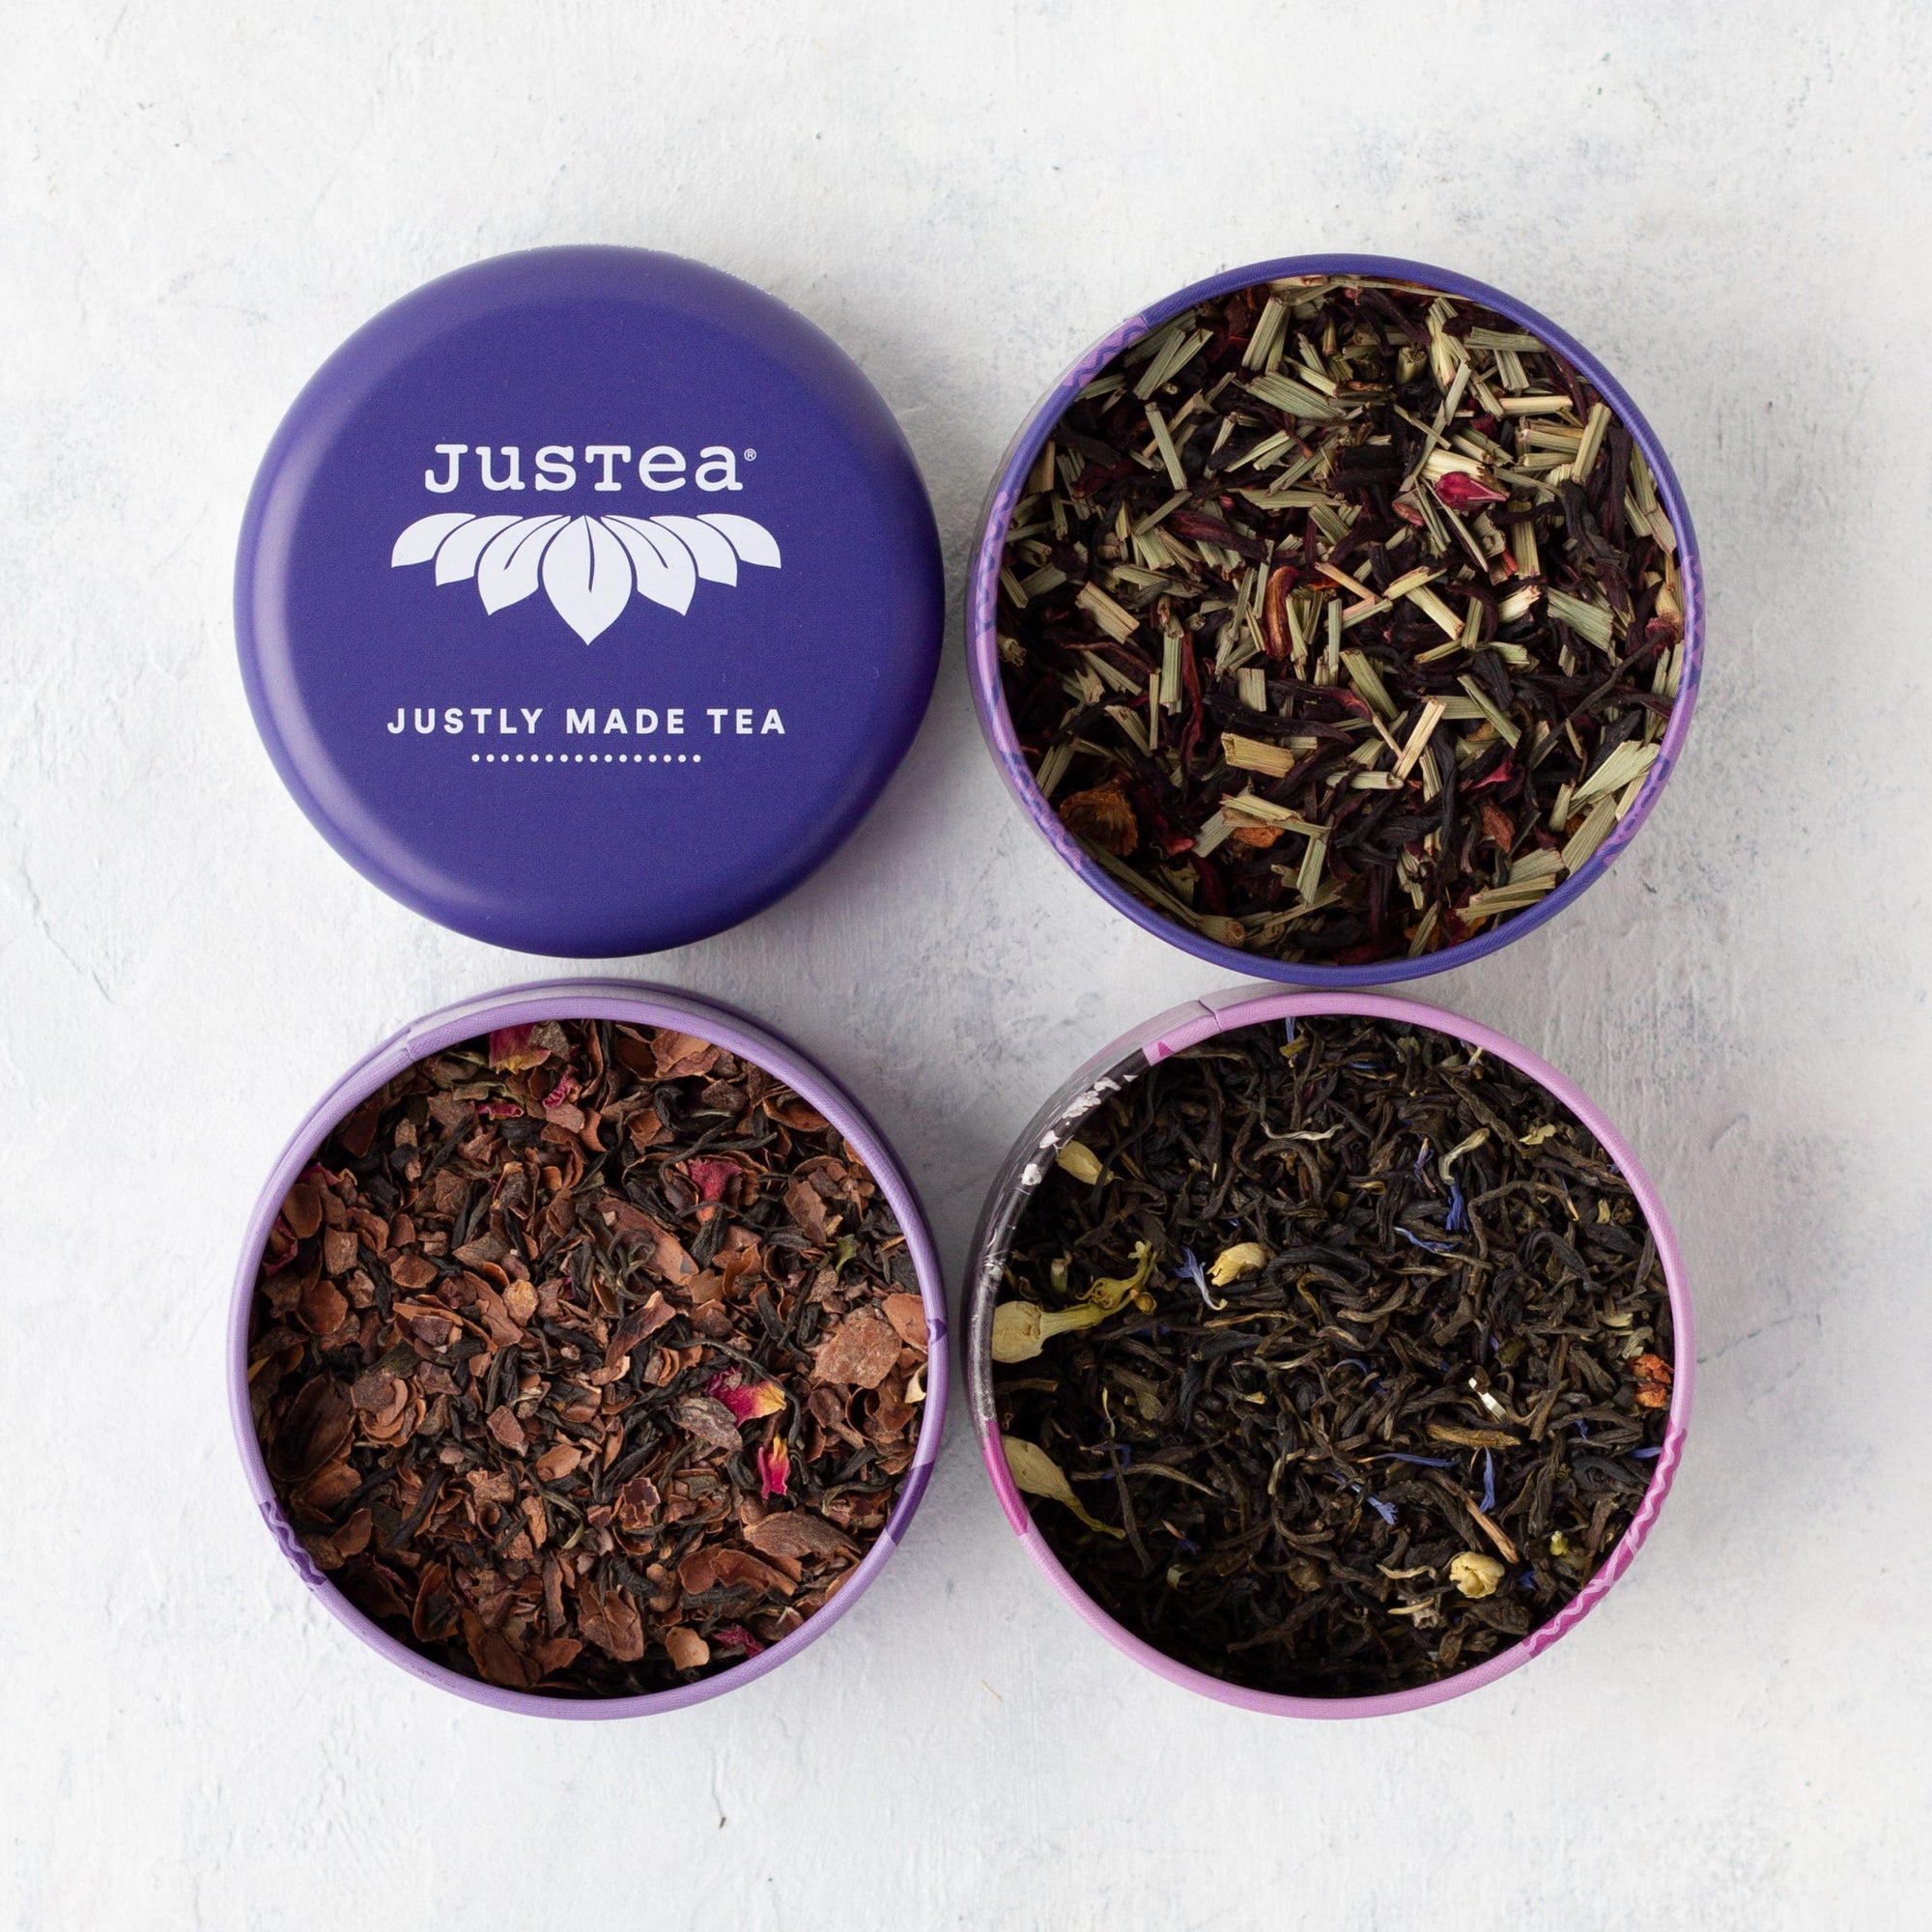 Justea tea trio: Purple tea